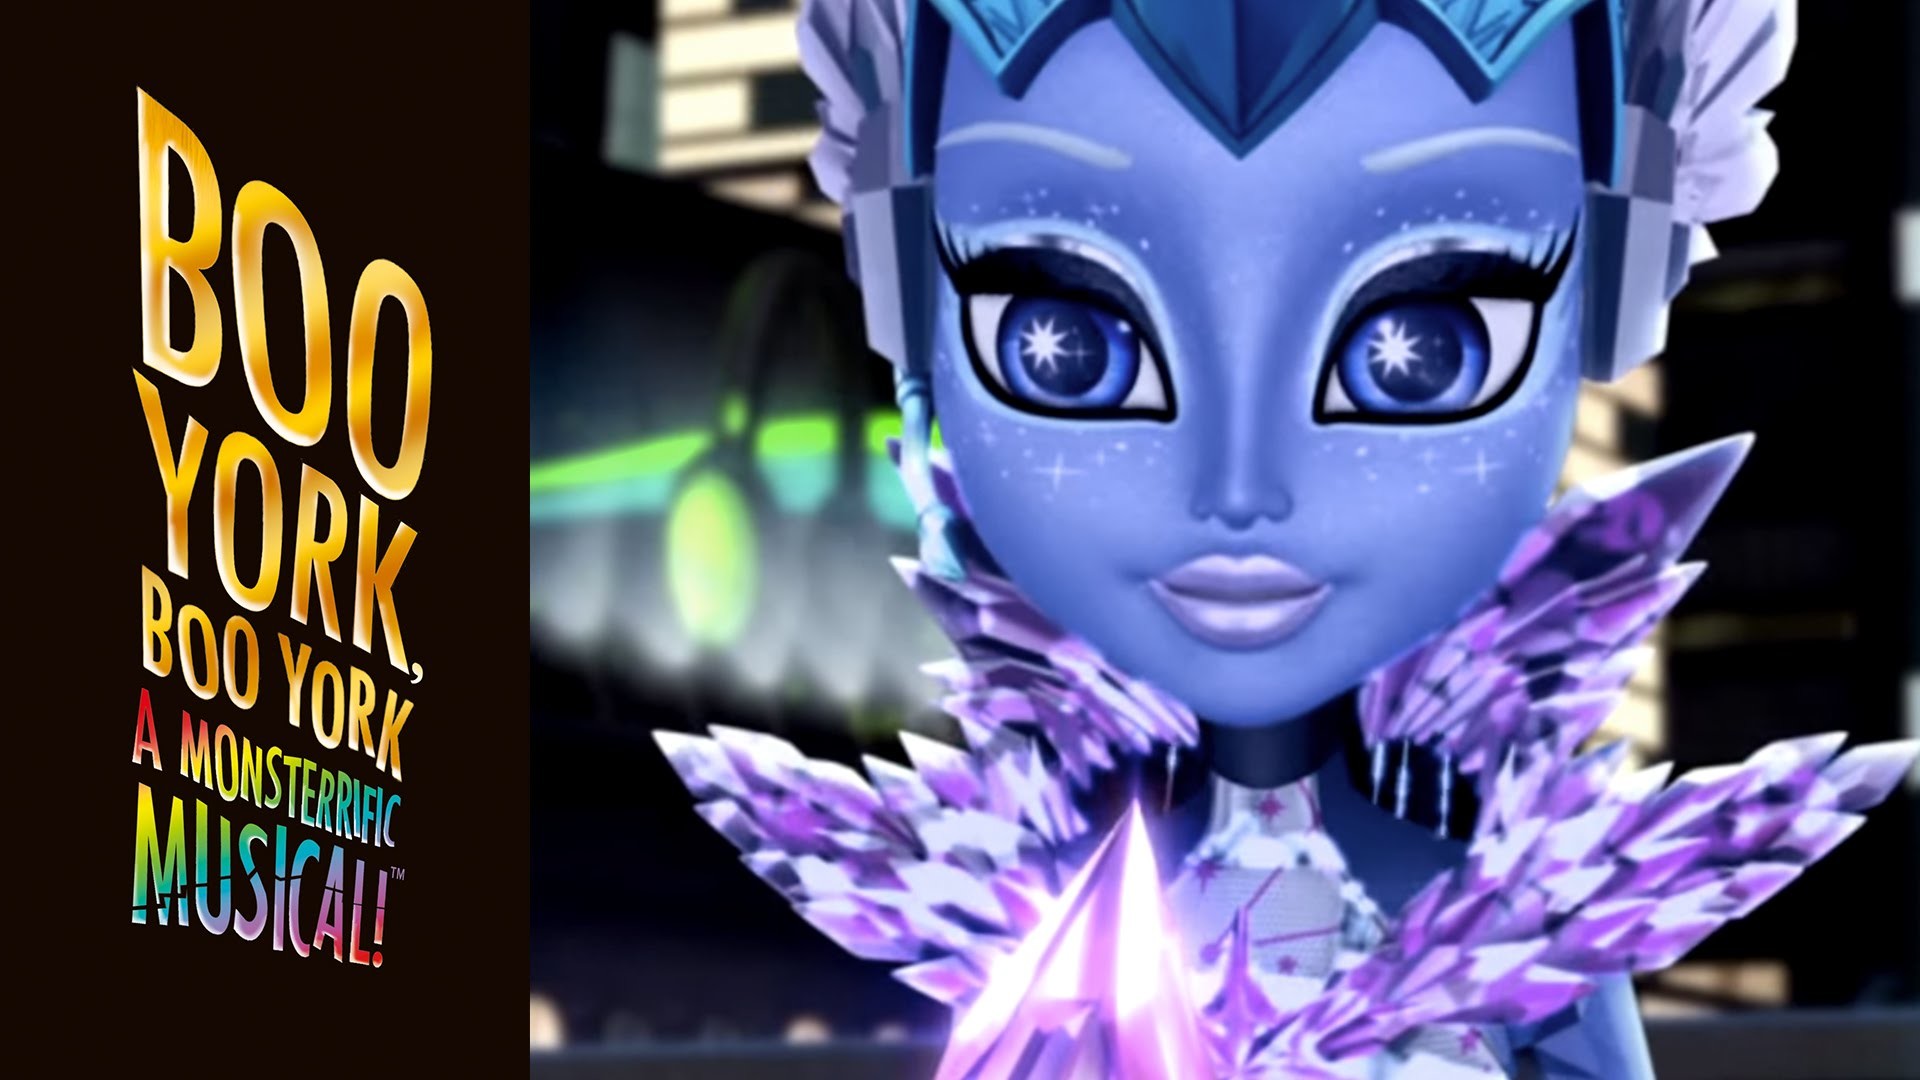 1920x1080 Meet Astranova, Daughter of the Comet Aliens | Boo York, Boo York | Monster  High - YouTube